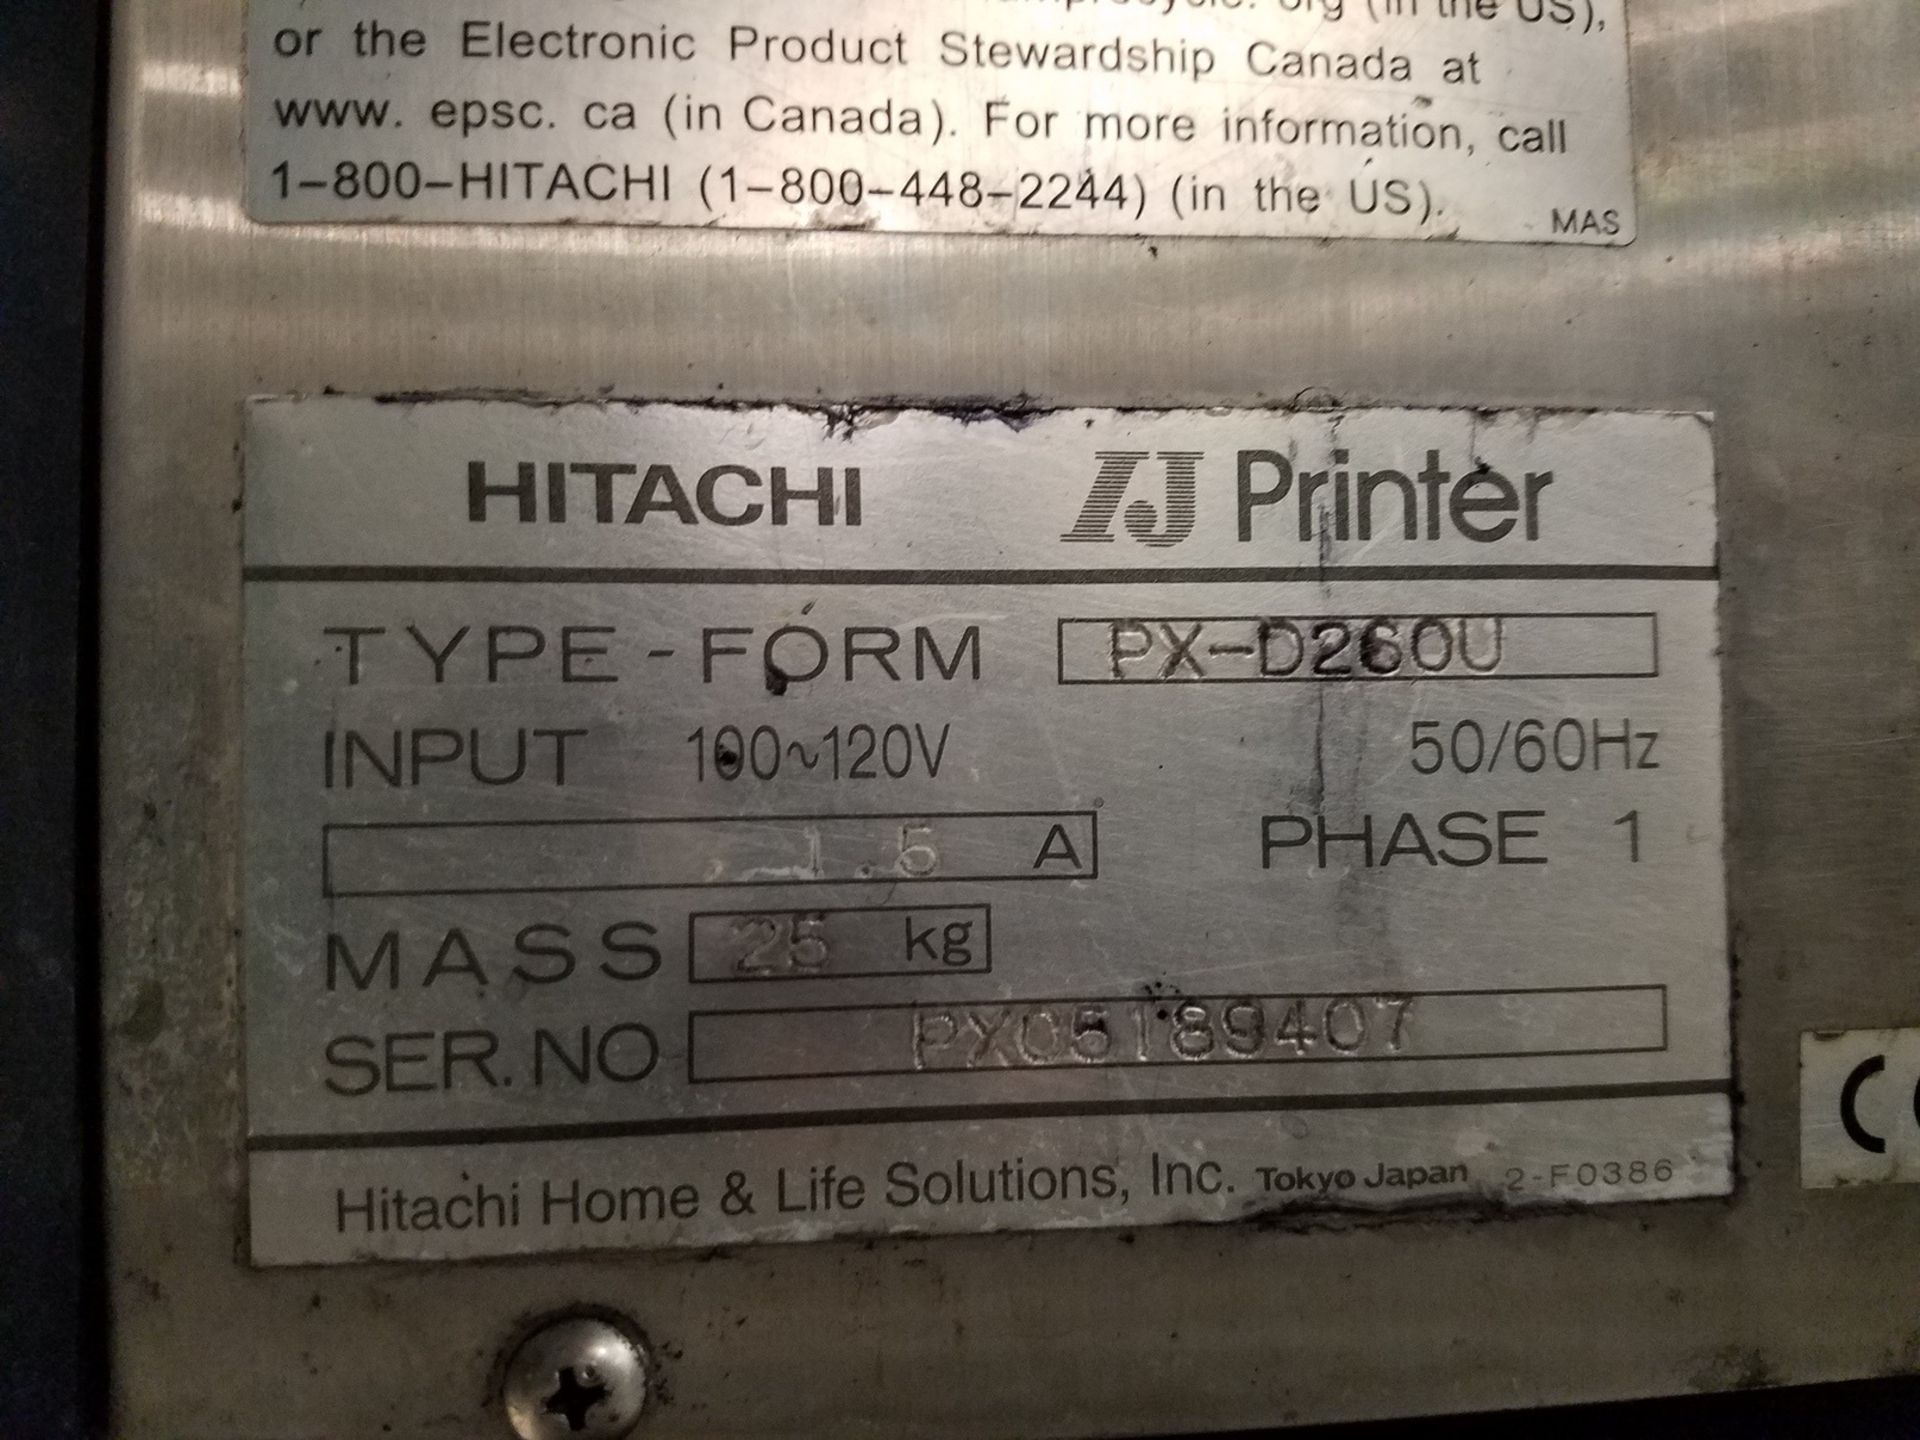 Hitachi Inkjet Printer, M# PX-D260U, S/N PX05189407 | Rigging: $35 - Image 2 of 2